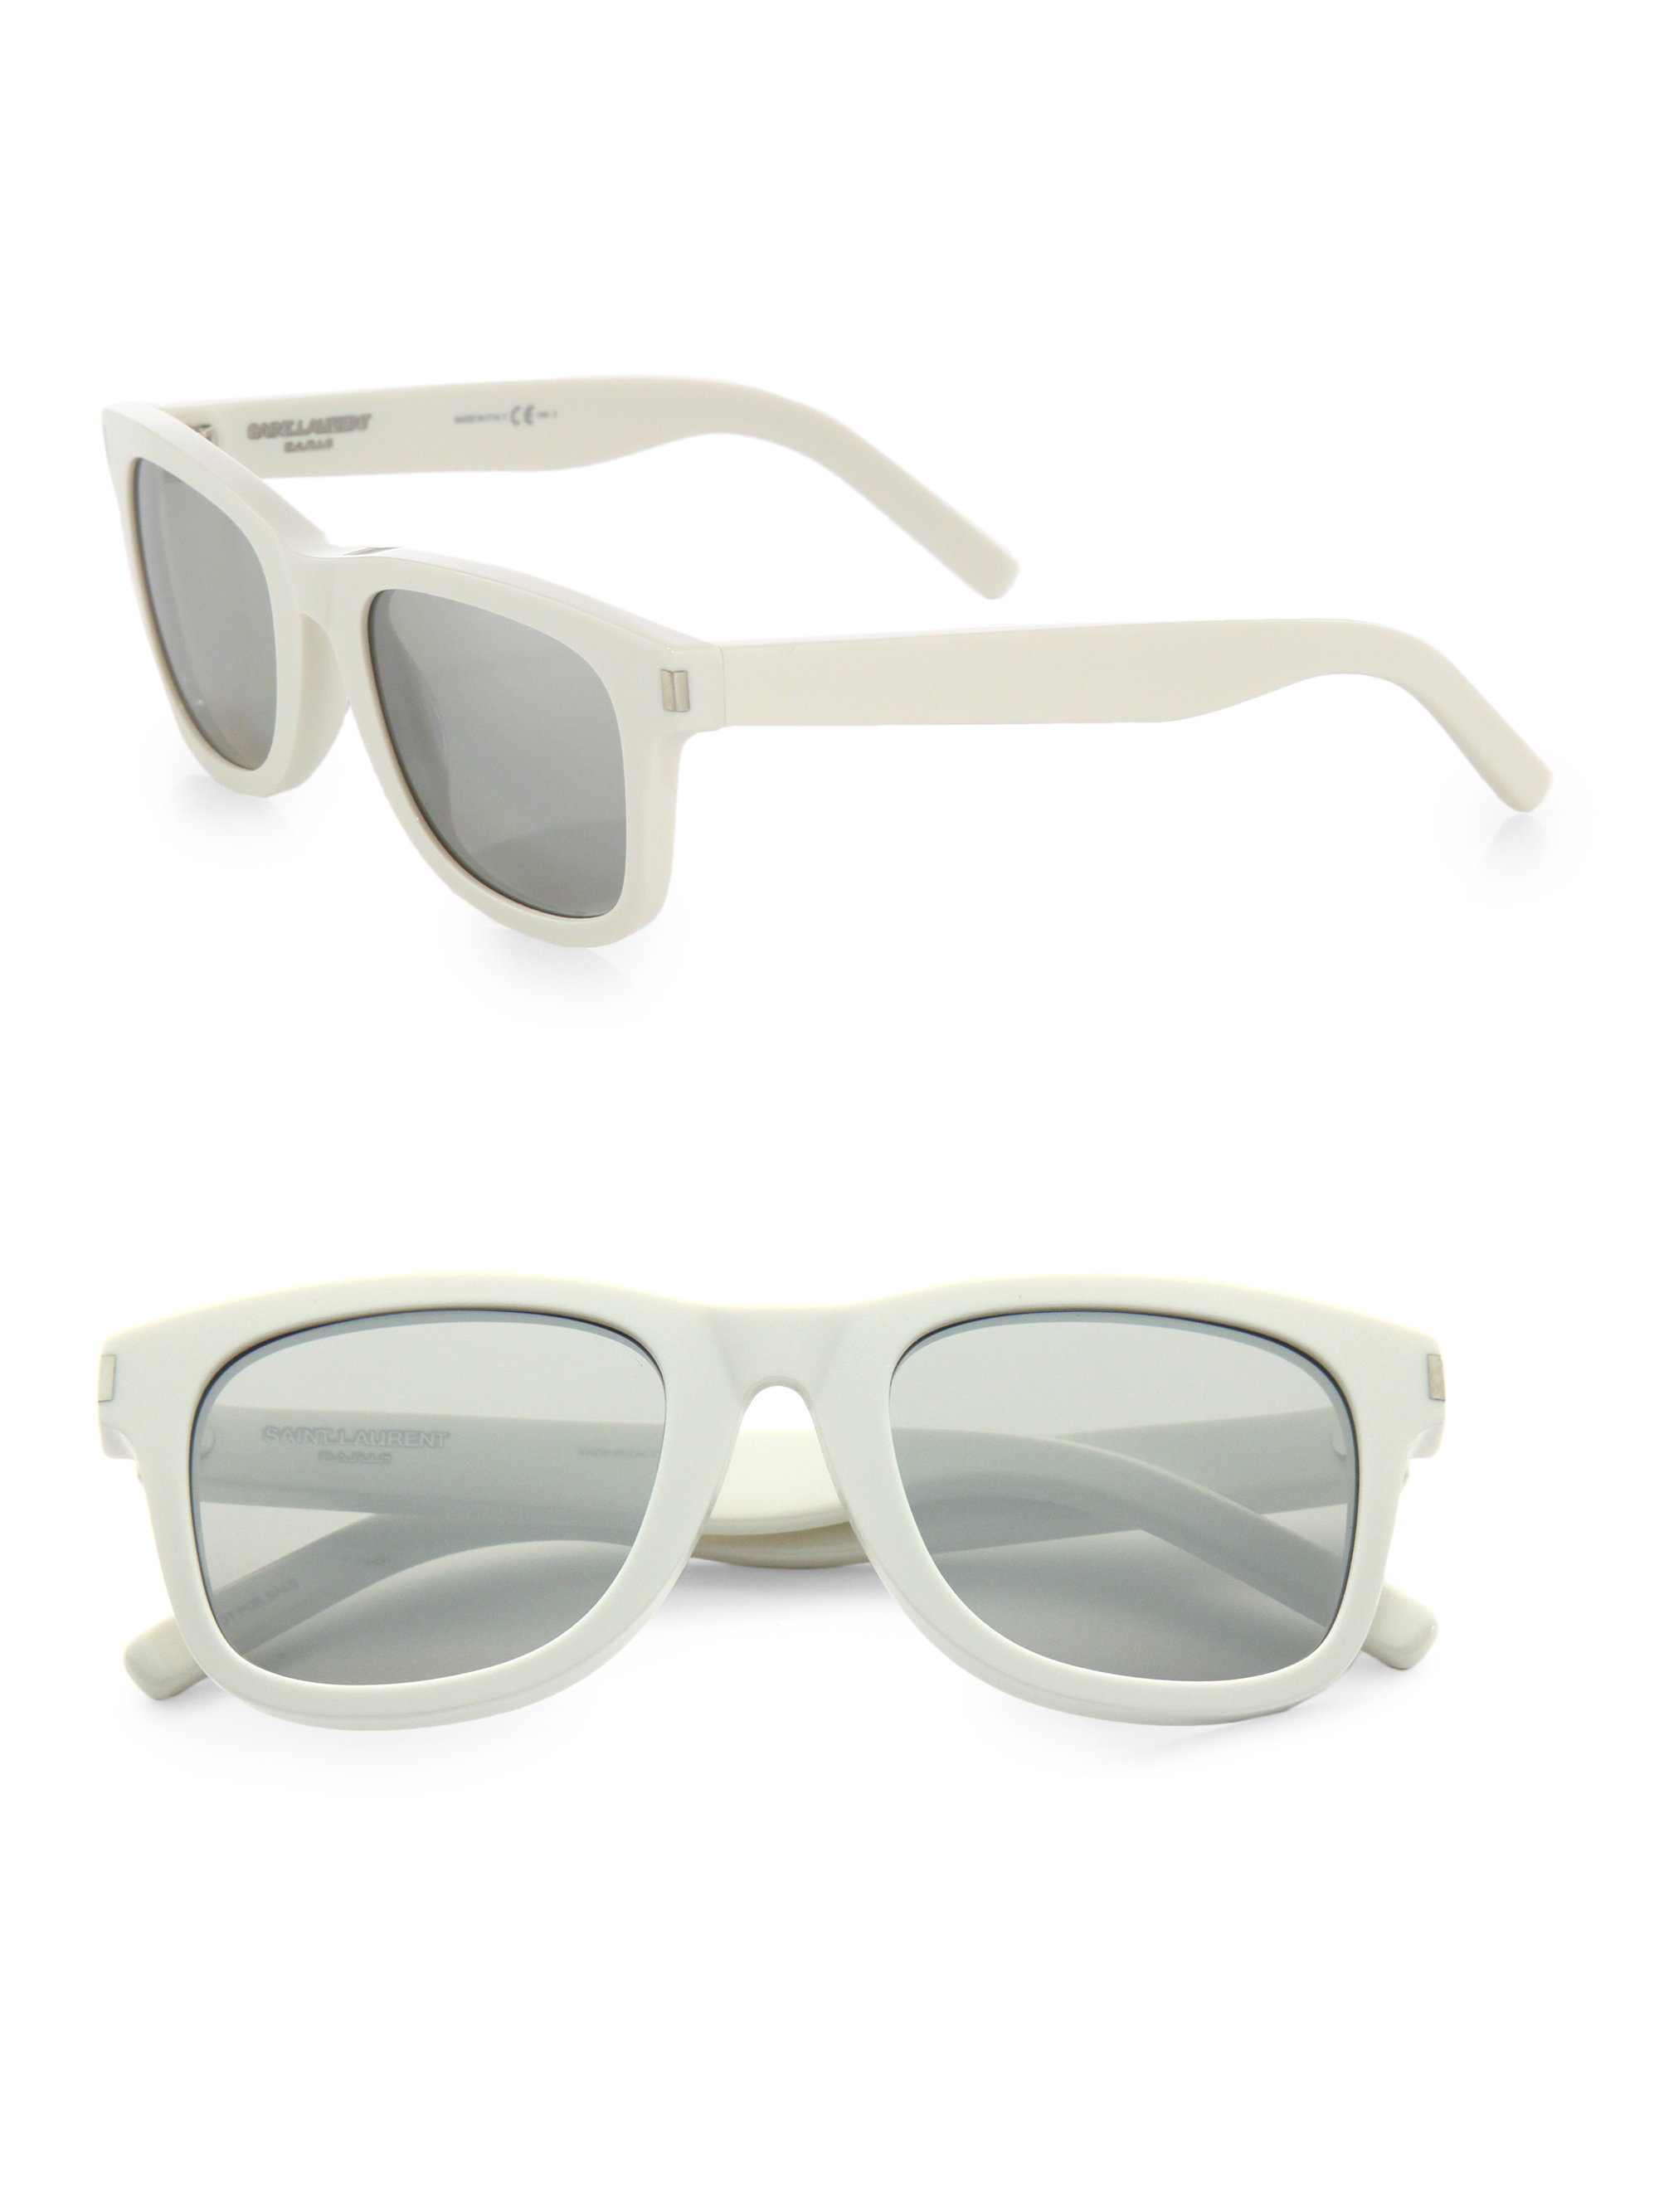 Oakley Womens Sunglasses White Frame